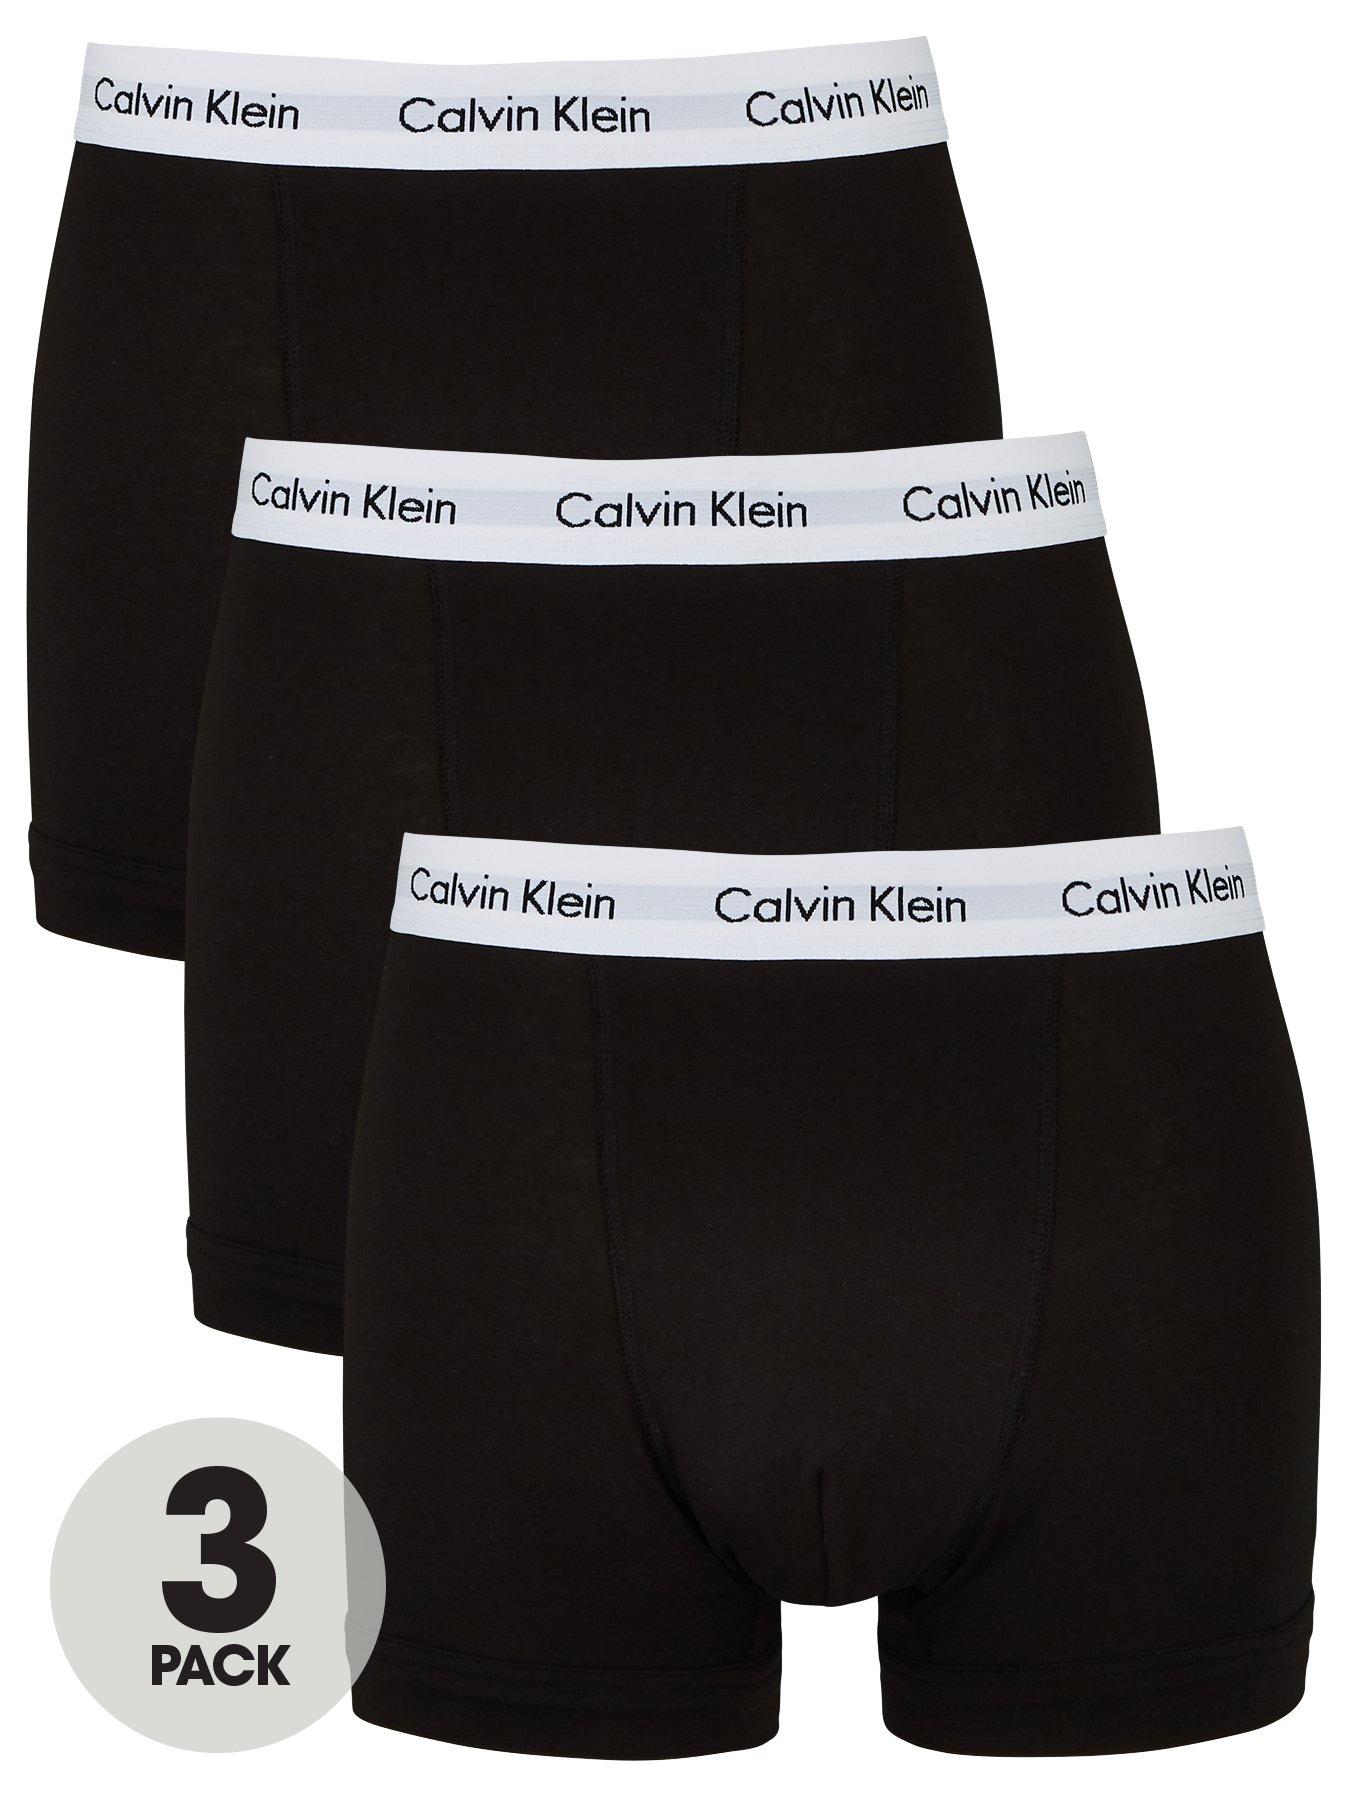 DKNY Classic Cotton Stretch Boxer Briefs Men's Underwear - 3-Pack Medium